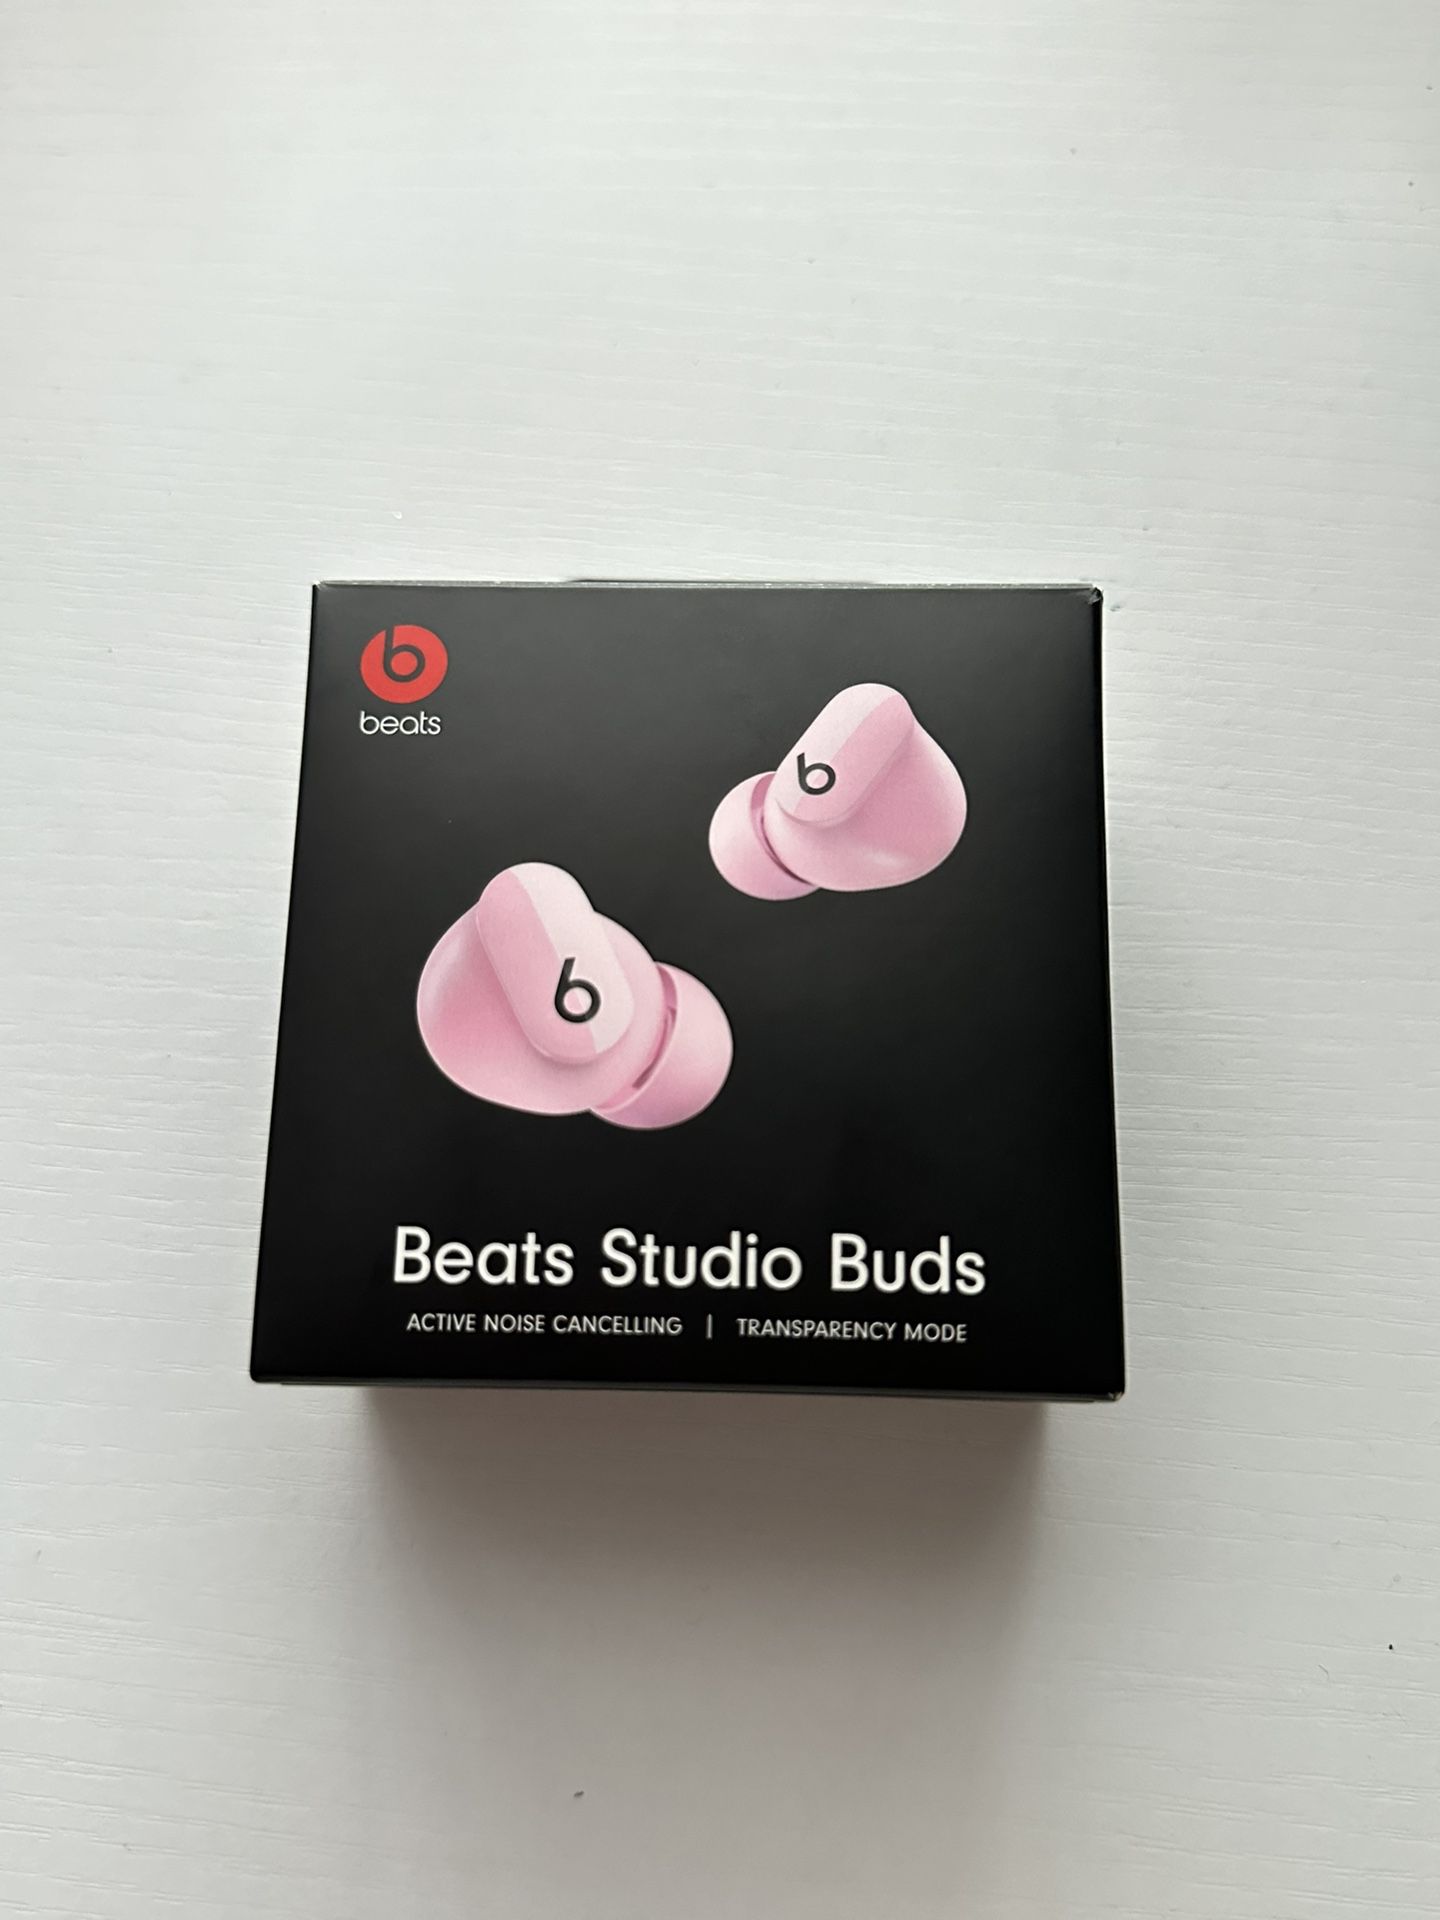 Beats Studio buds